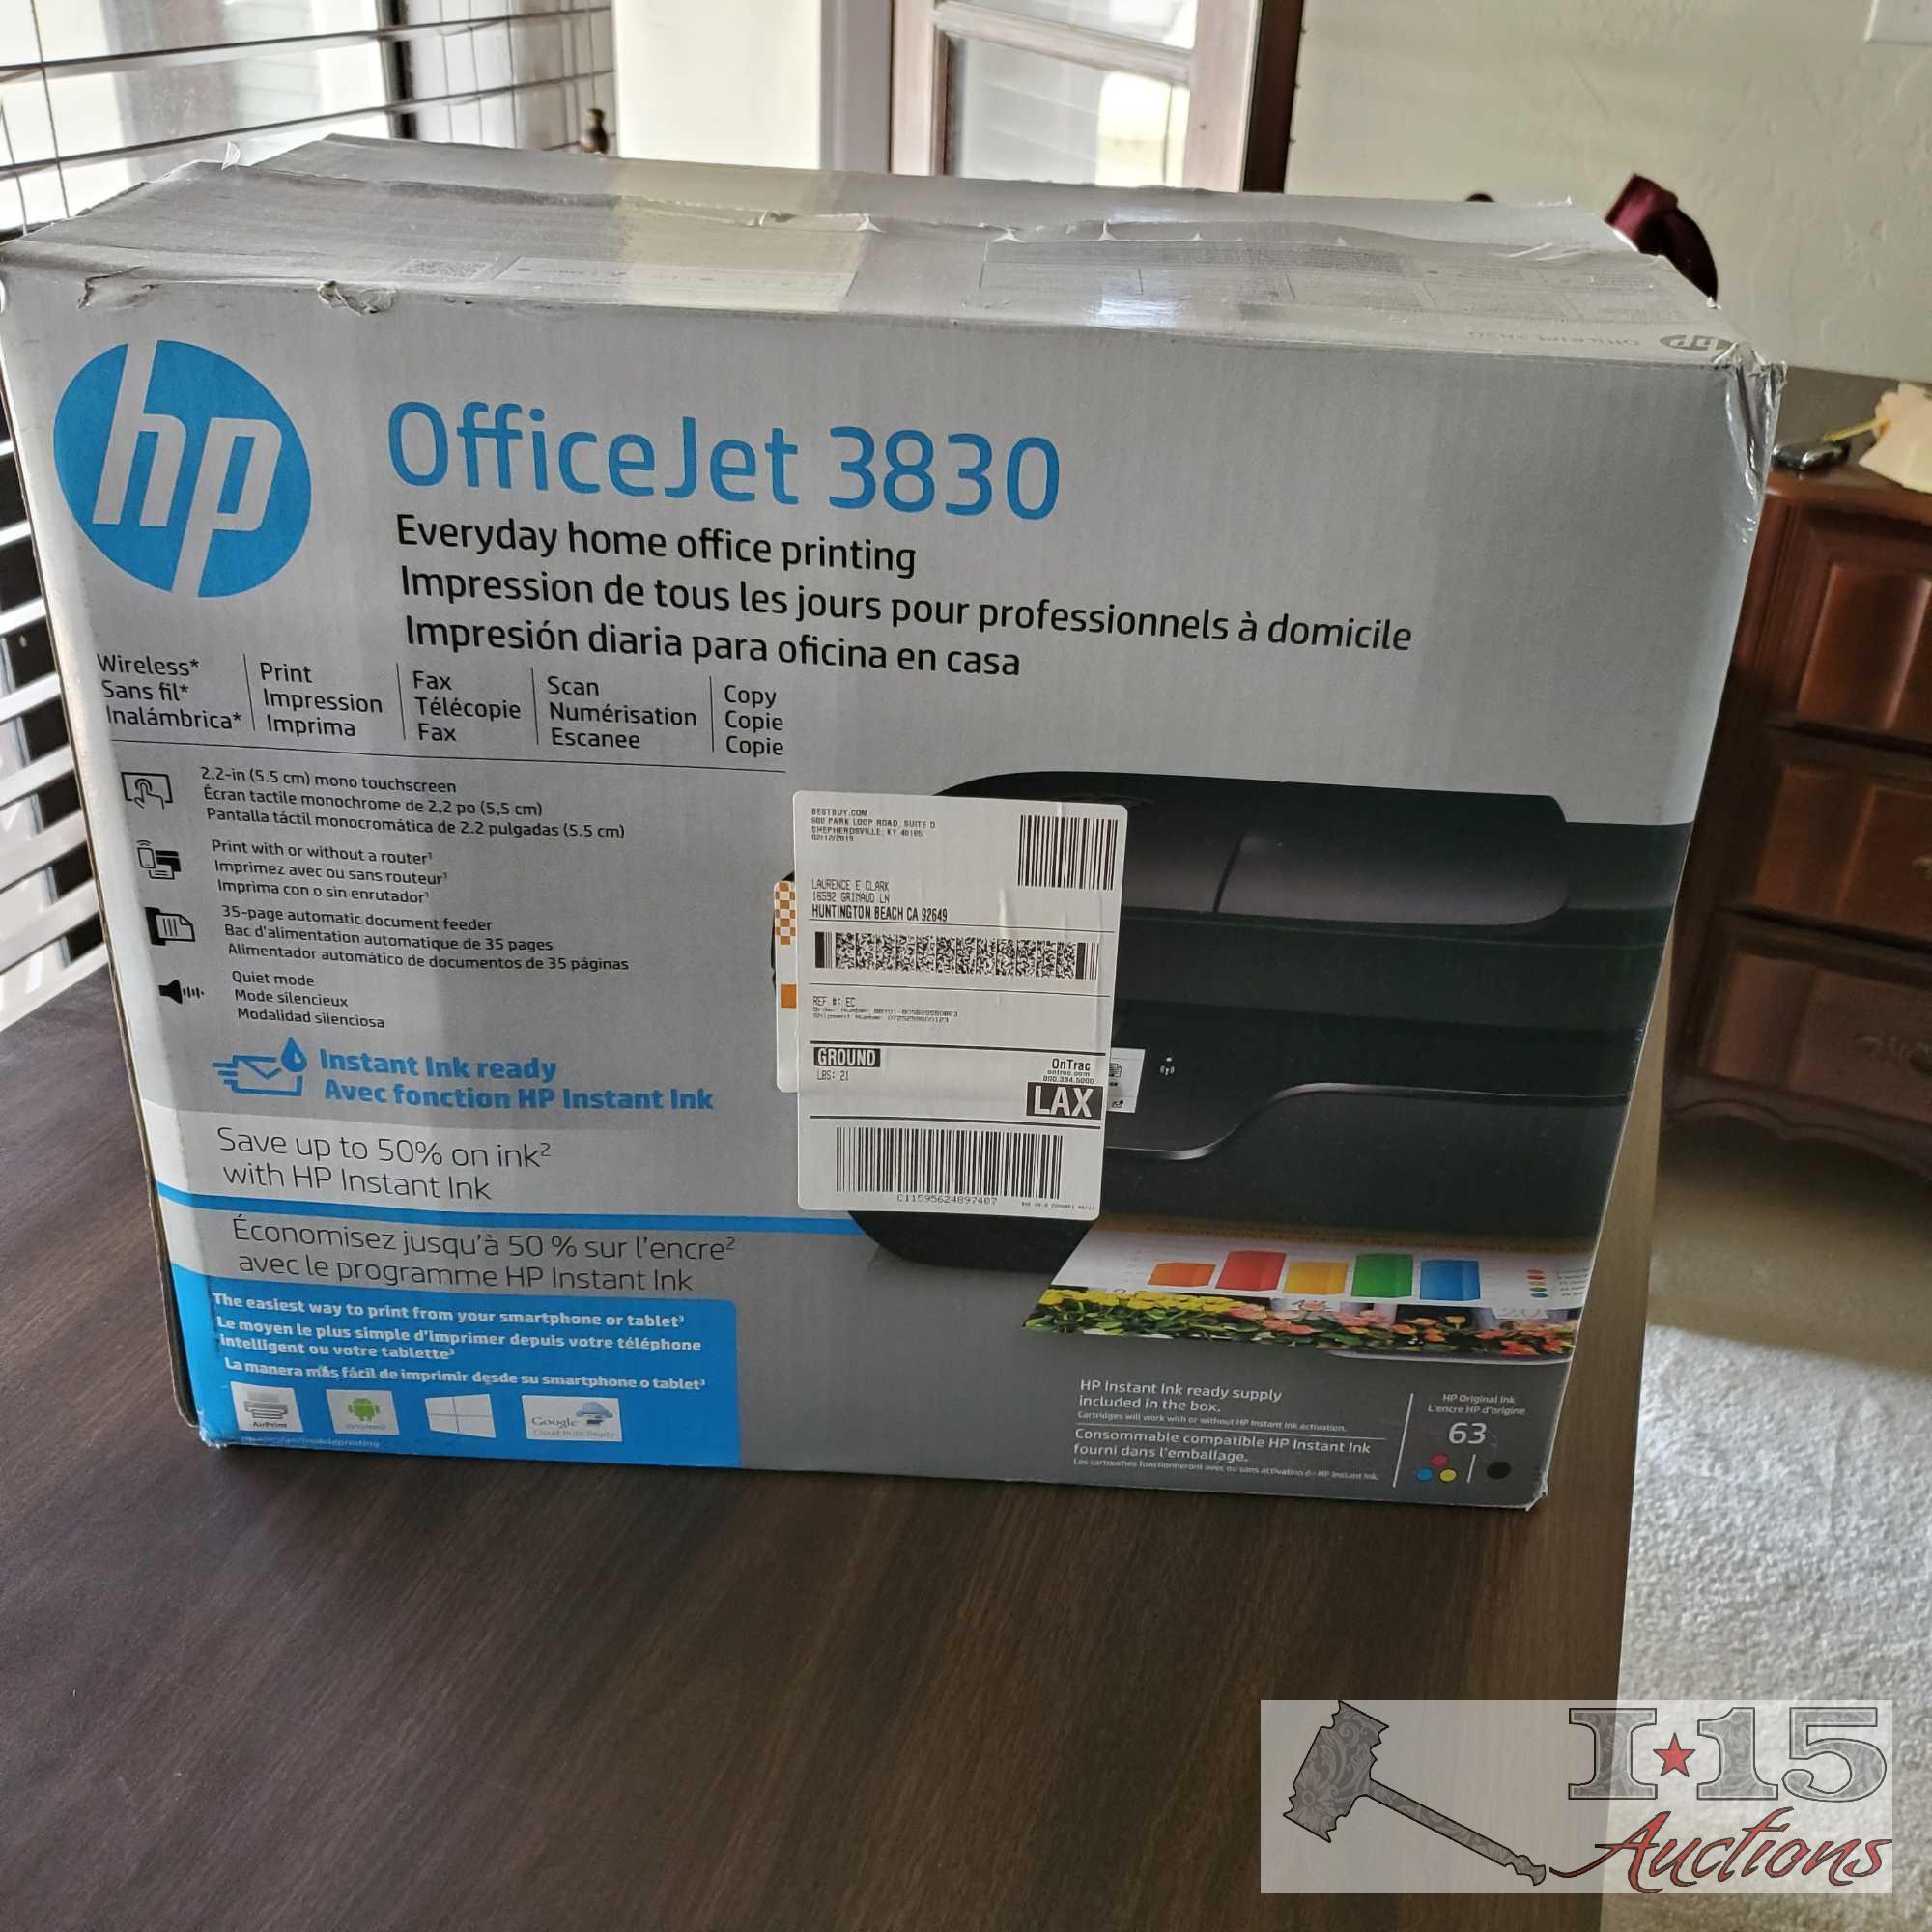 Officejet 3830 with Orginal Box